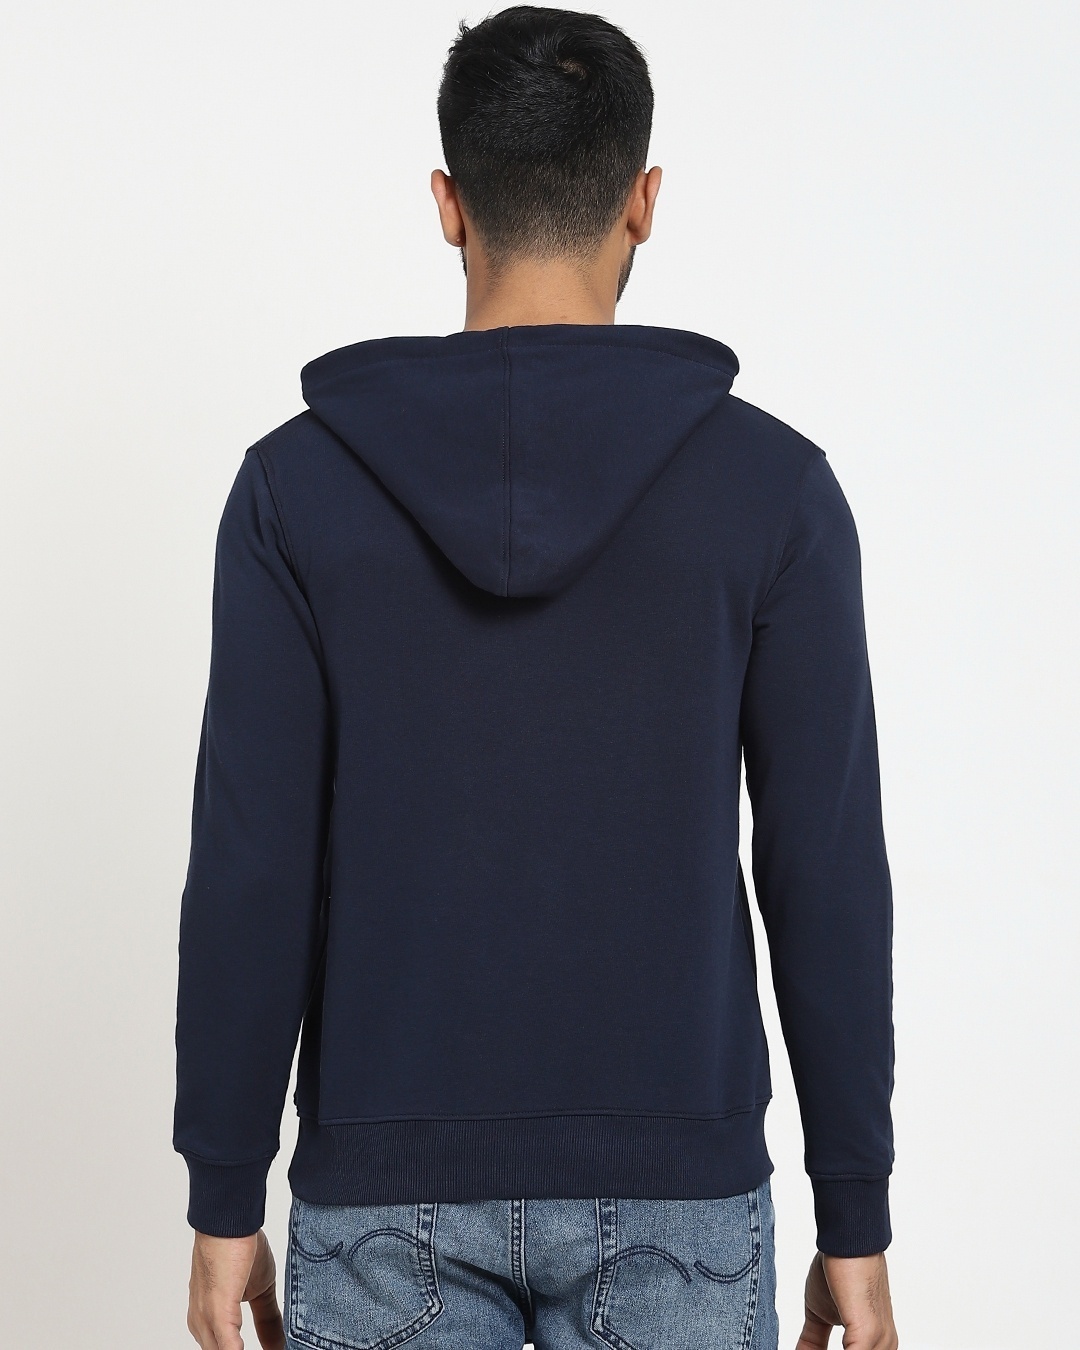 Shop Navy Blue Hoodie Sweatshirt-Design